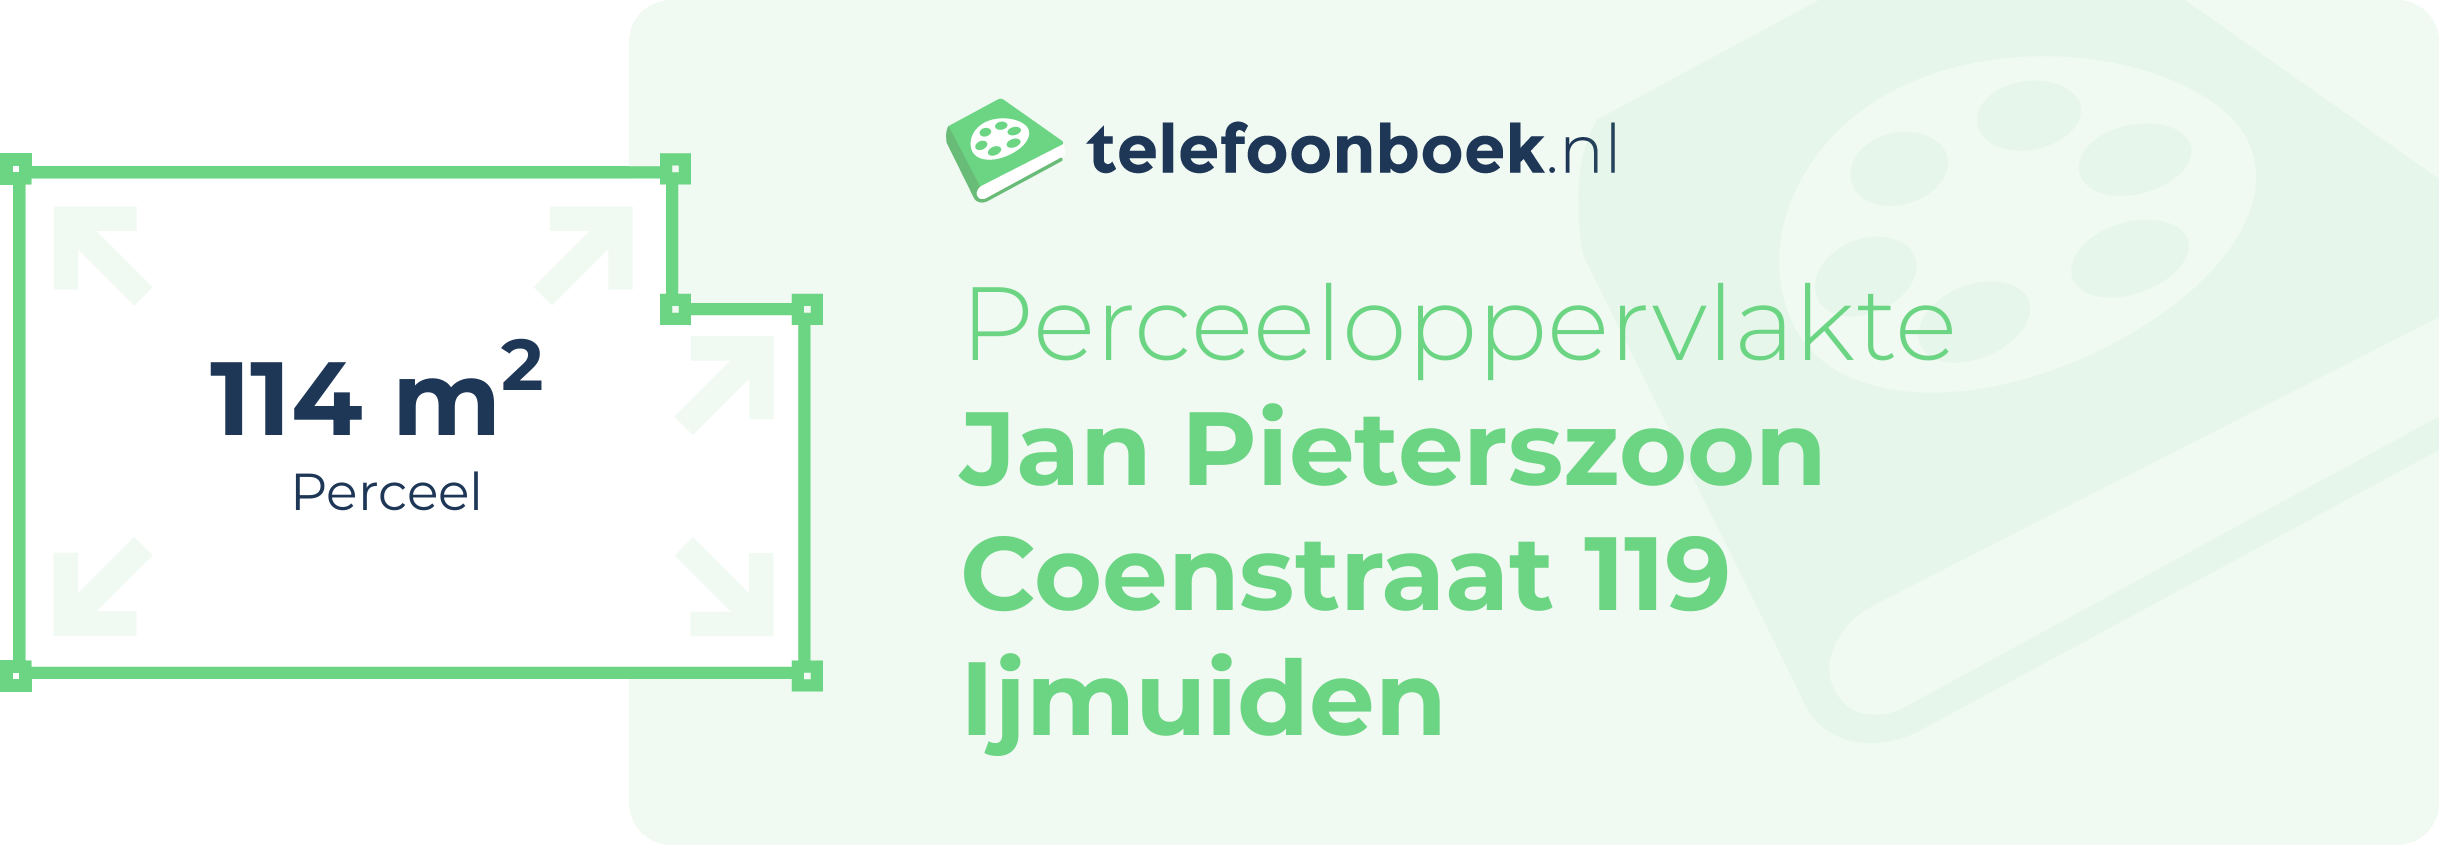 Perceeloppervlakte Jan Pieterszoon Coenstraat 119 Ijmuiden